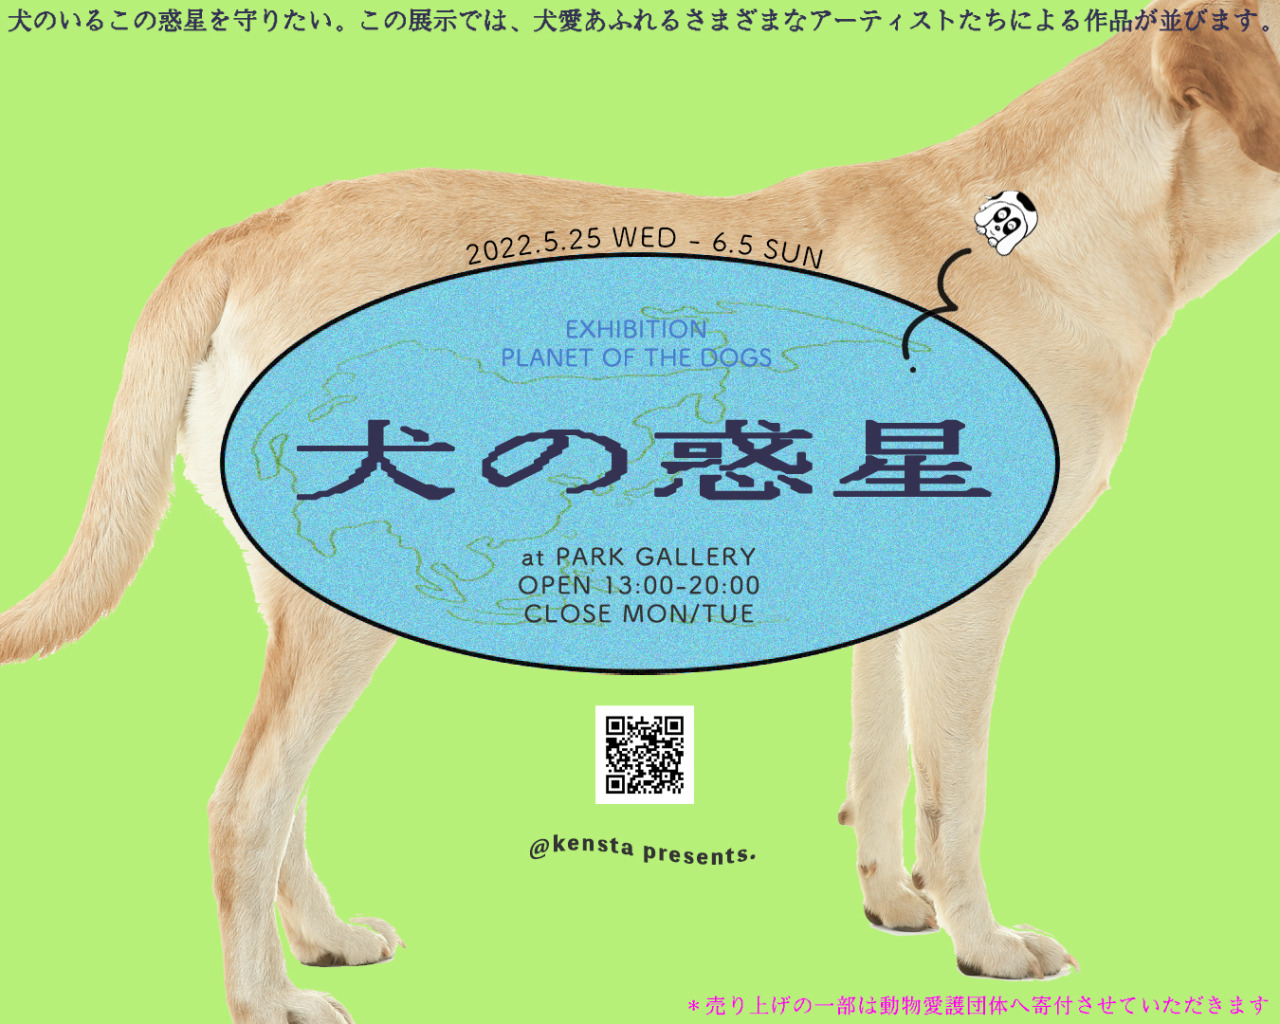 Park Gallery Official Web 終了しました 犬スタ Presents 犬の惑星 ほし 22 5 25 Wed